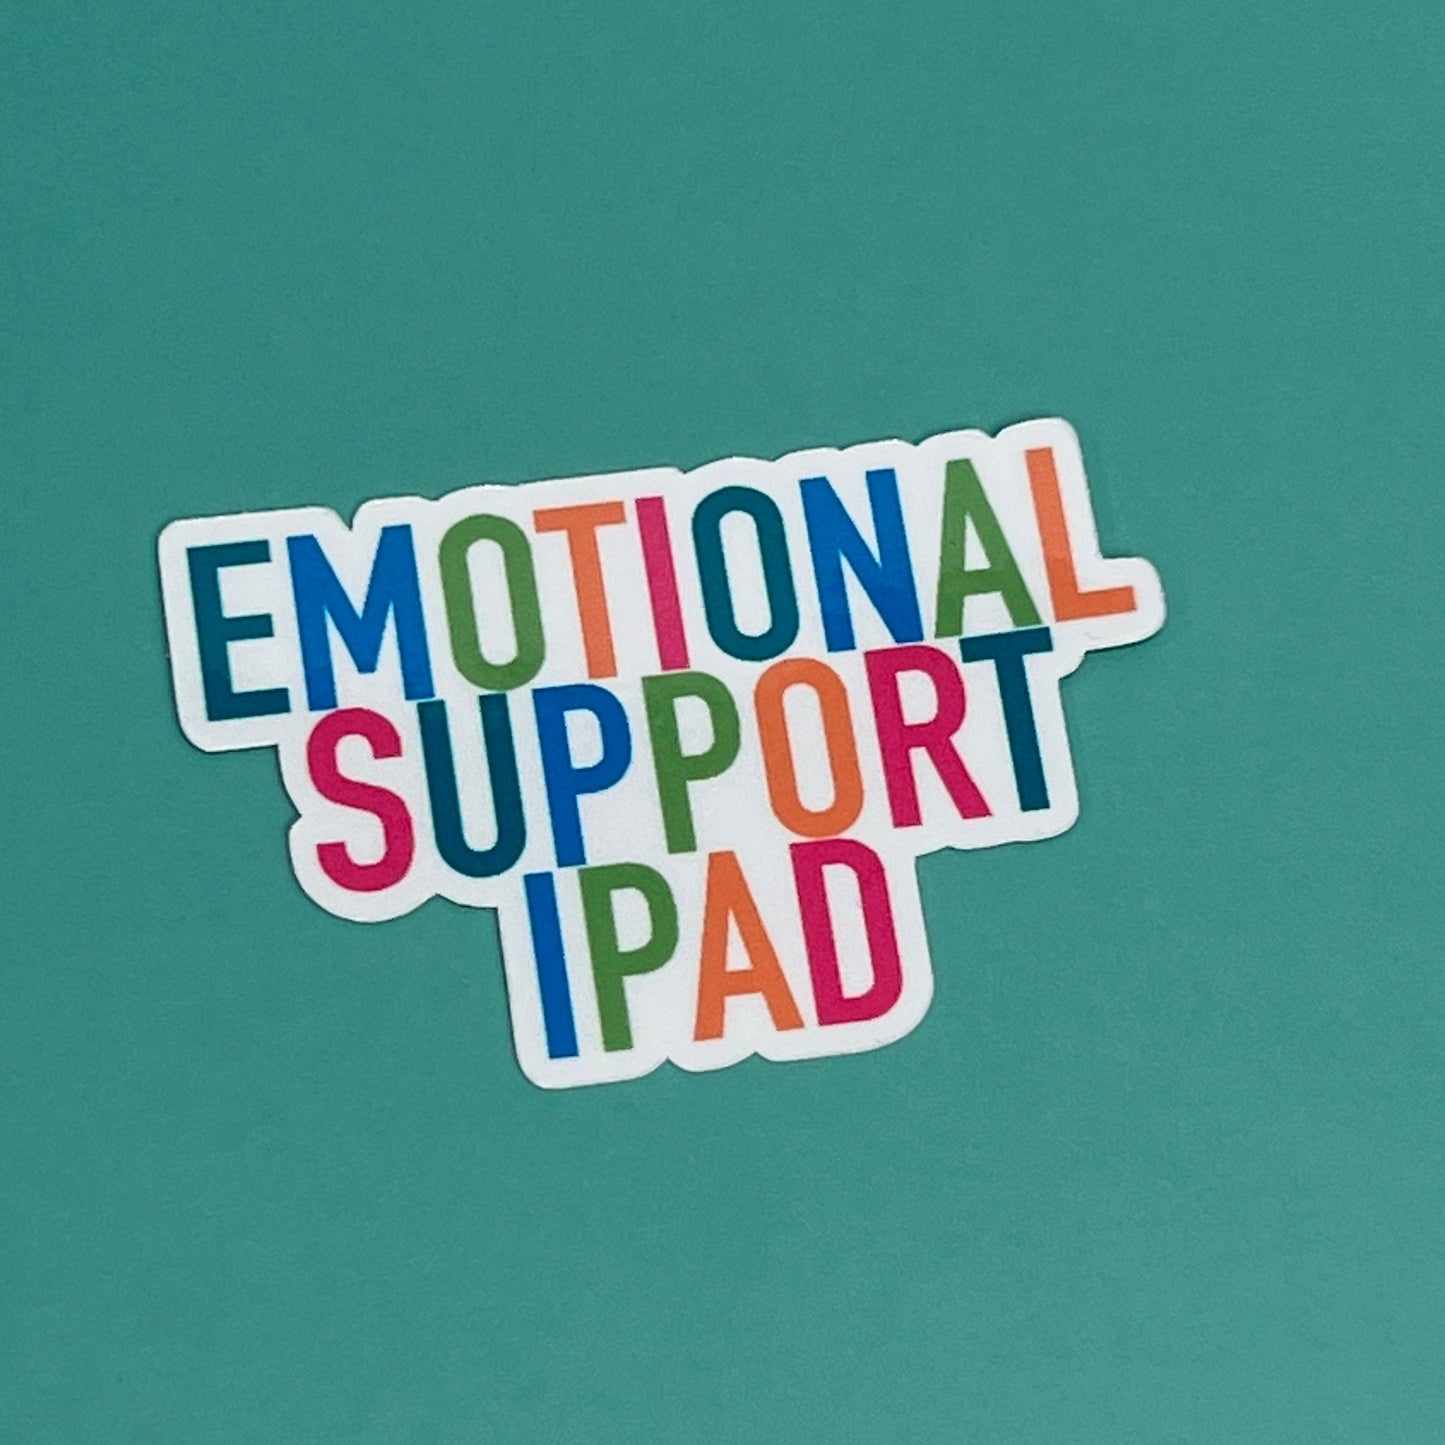 Emotional Support Ipad - Waterproof Sticker